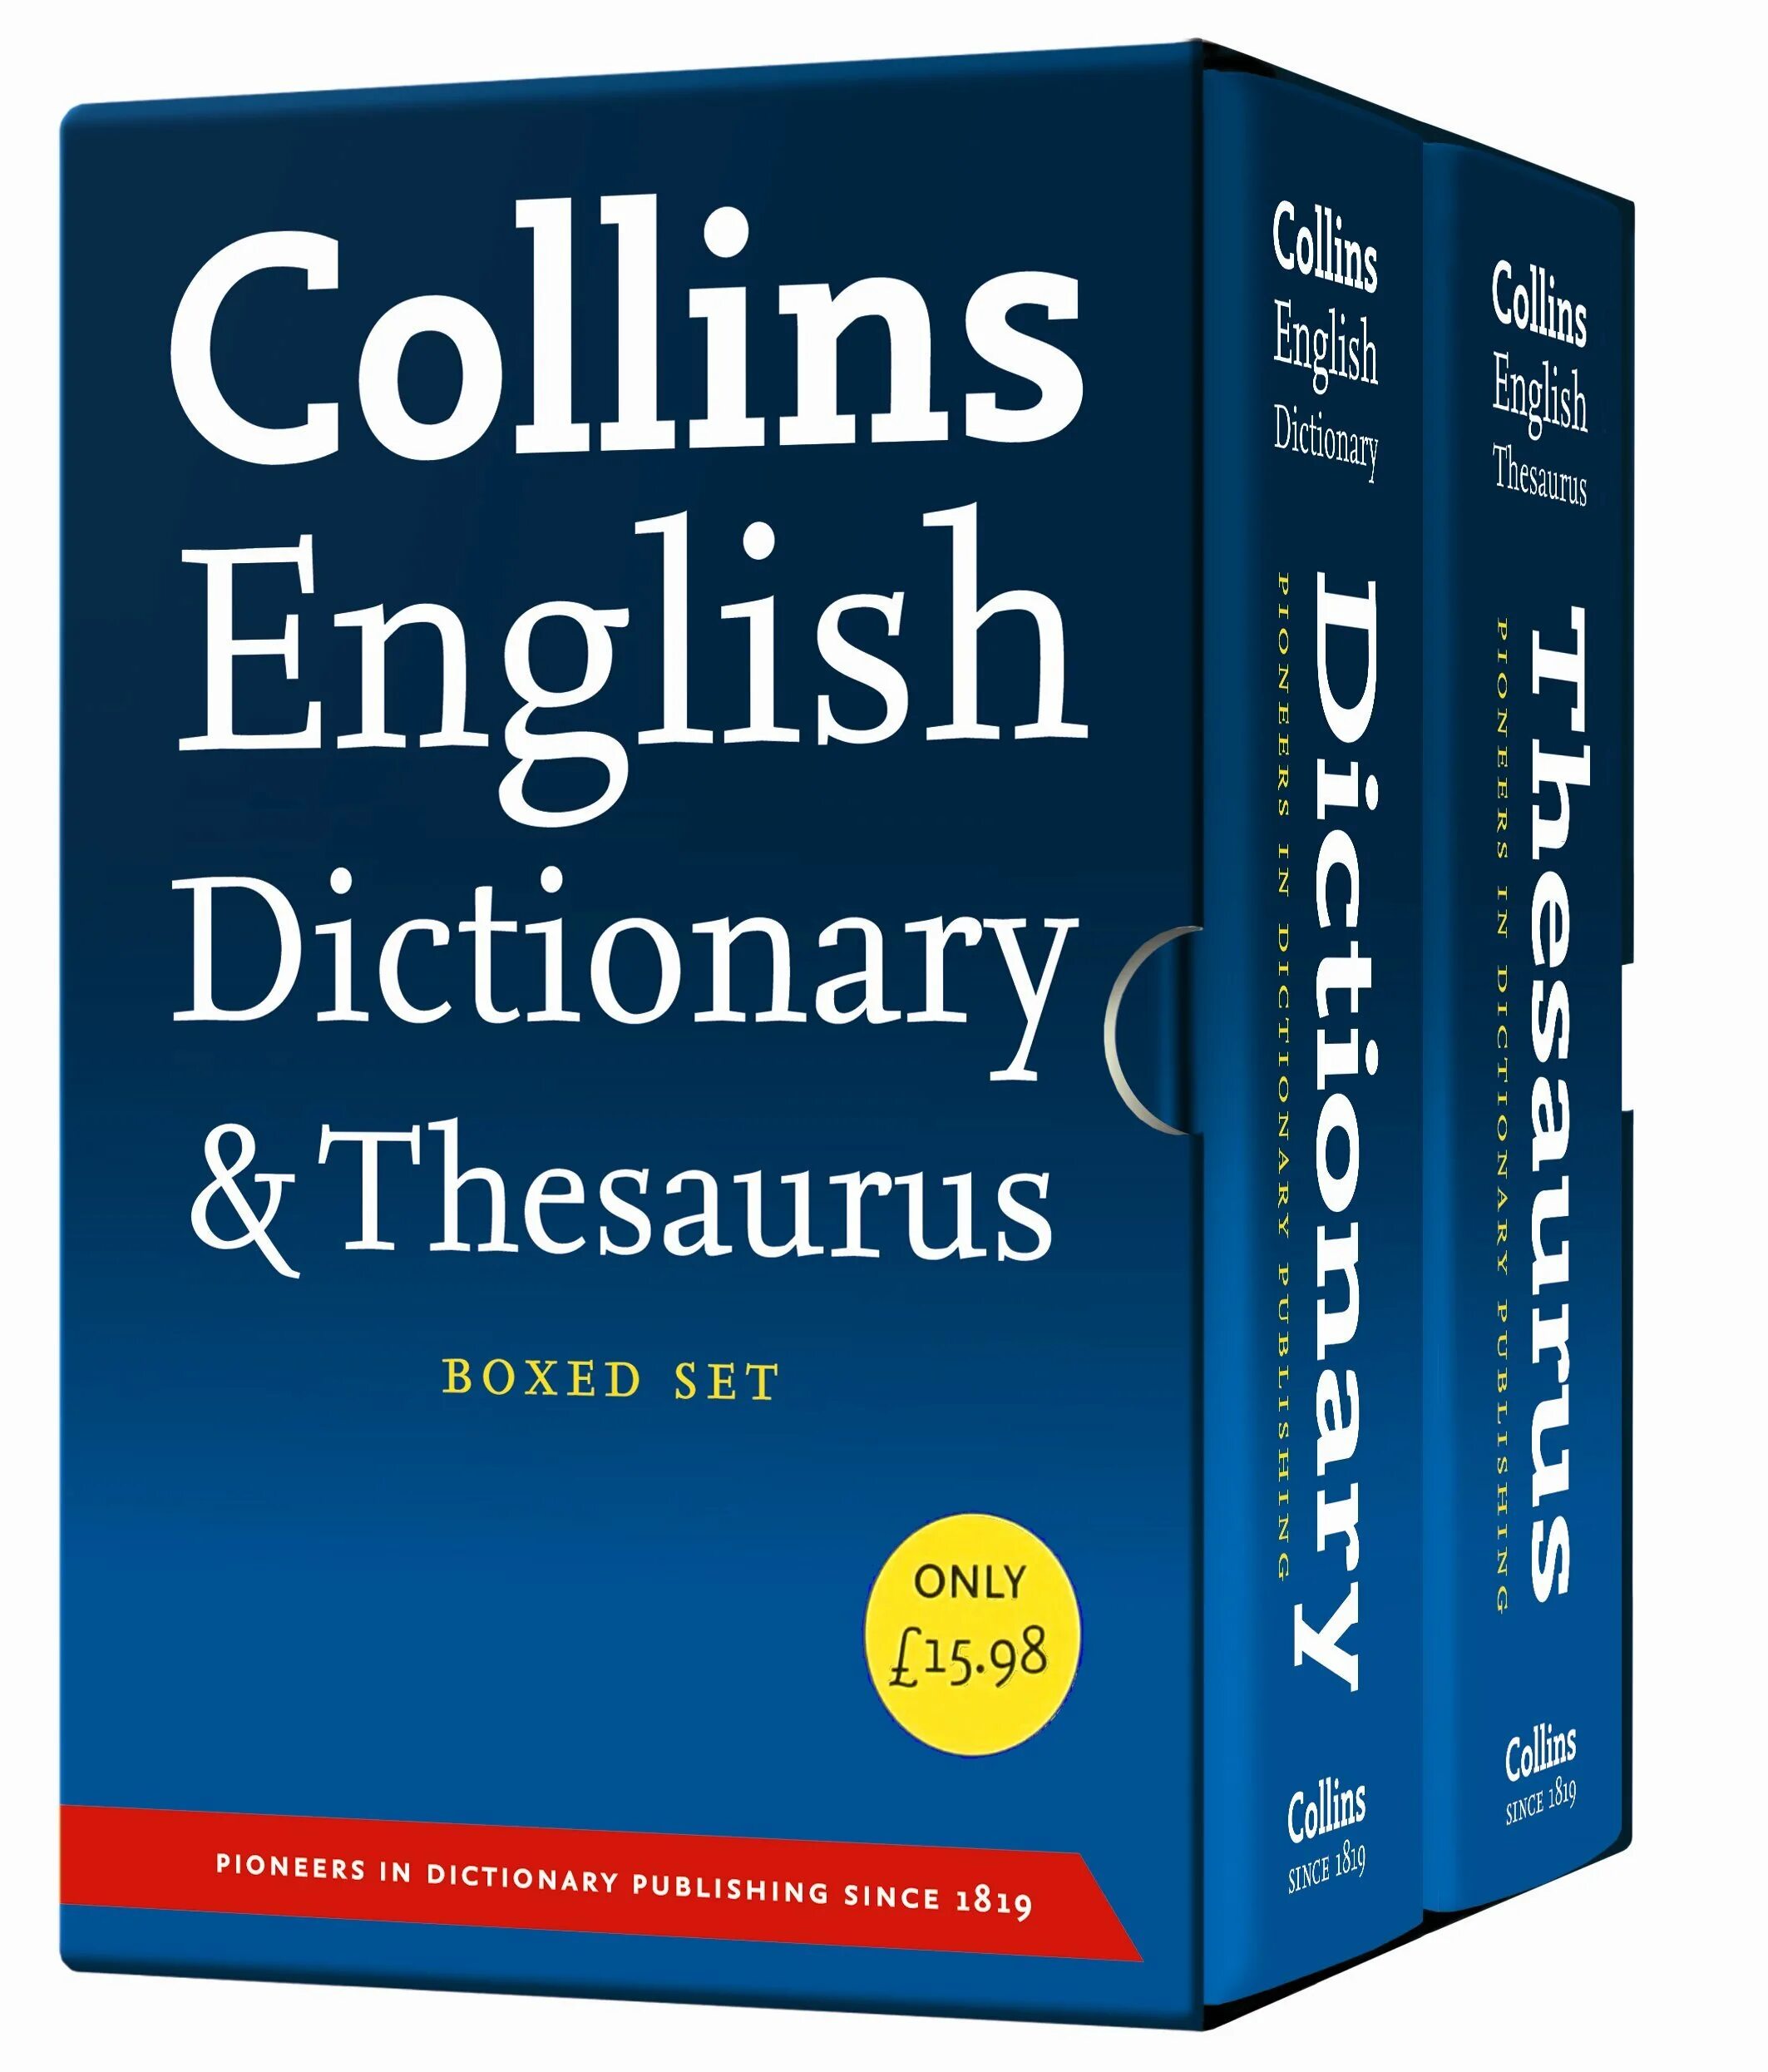 Two dictionary. Словарь Collins. Collins English Dictionary. Коллинз ДИКШИНАРИ. Collins Thesaurus.